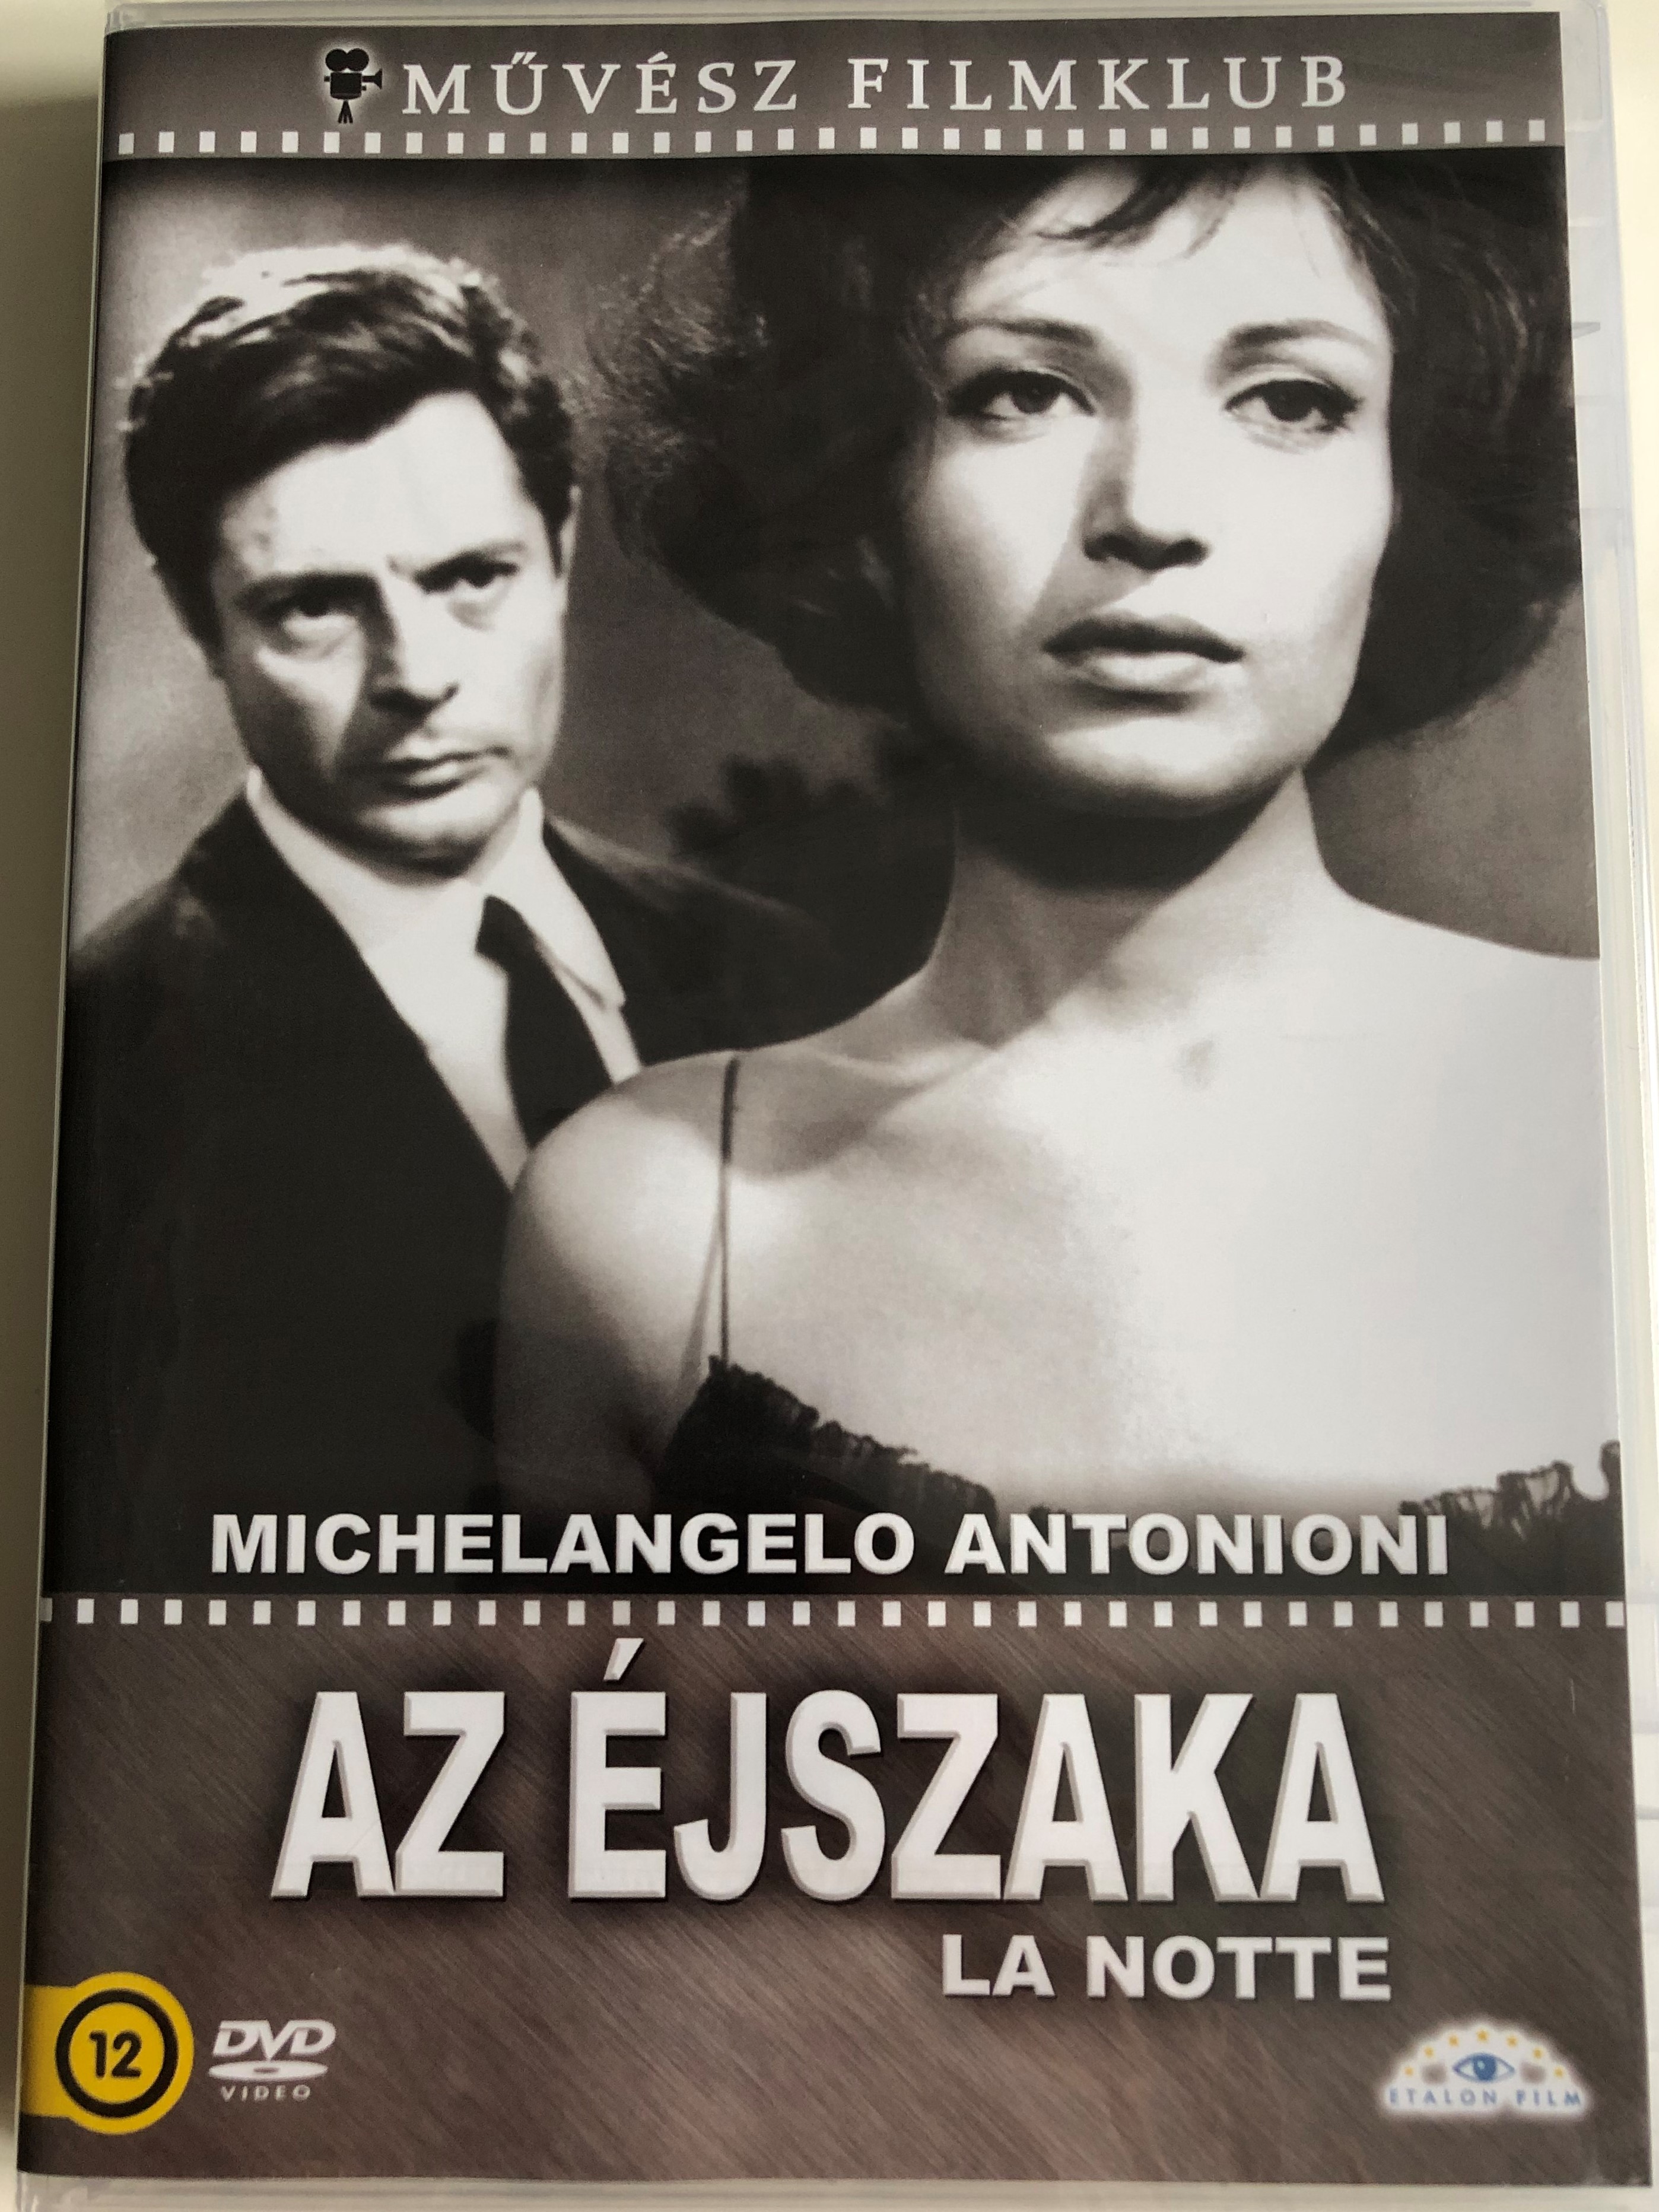 la-notte-dvd-1961-az-jszaka-the-night-directed-by-michelangelo-antonioni-starring-marcello-mastroianni-jeanne-moreau-monica-vitti-bernhard-wicki-m-v-sz-filmklub-1-.jpg